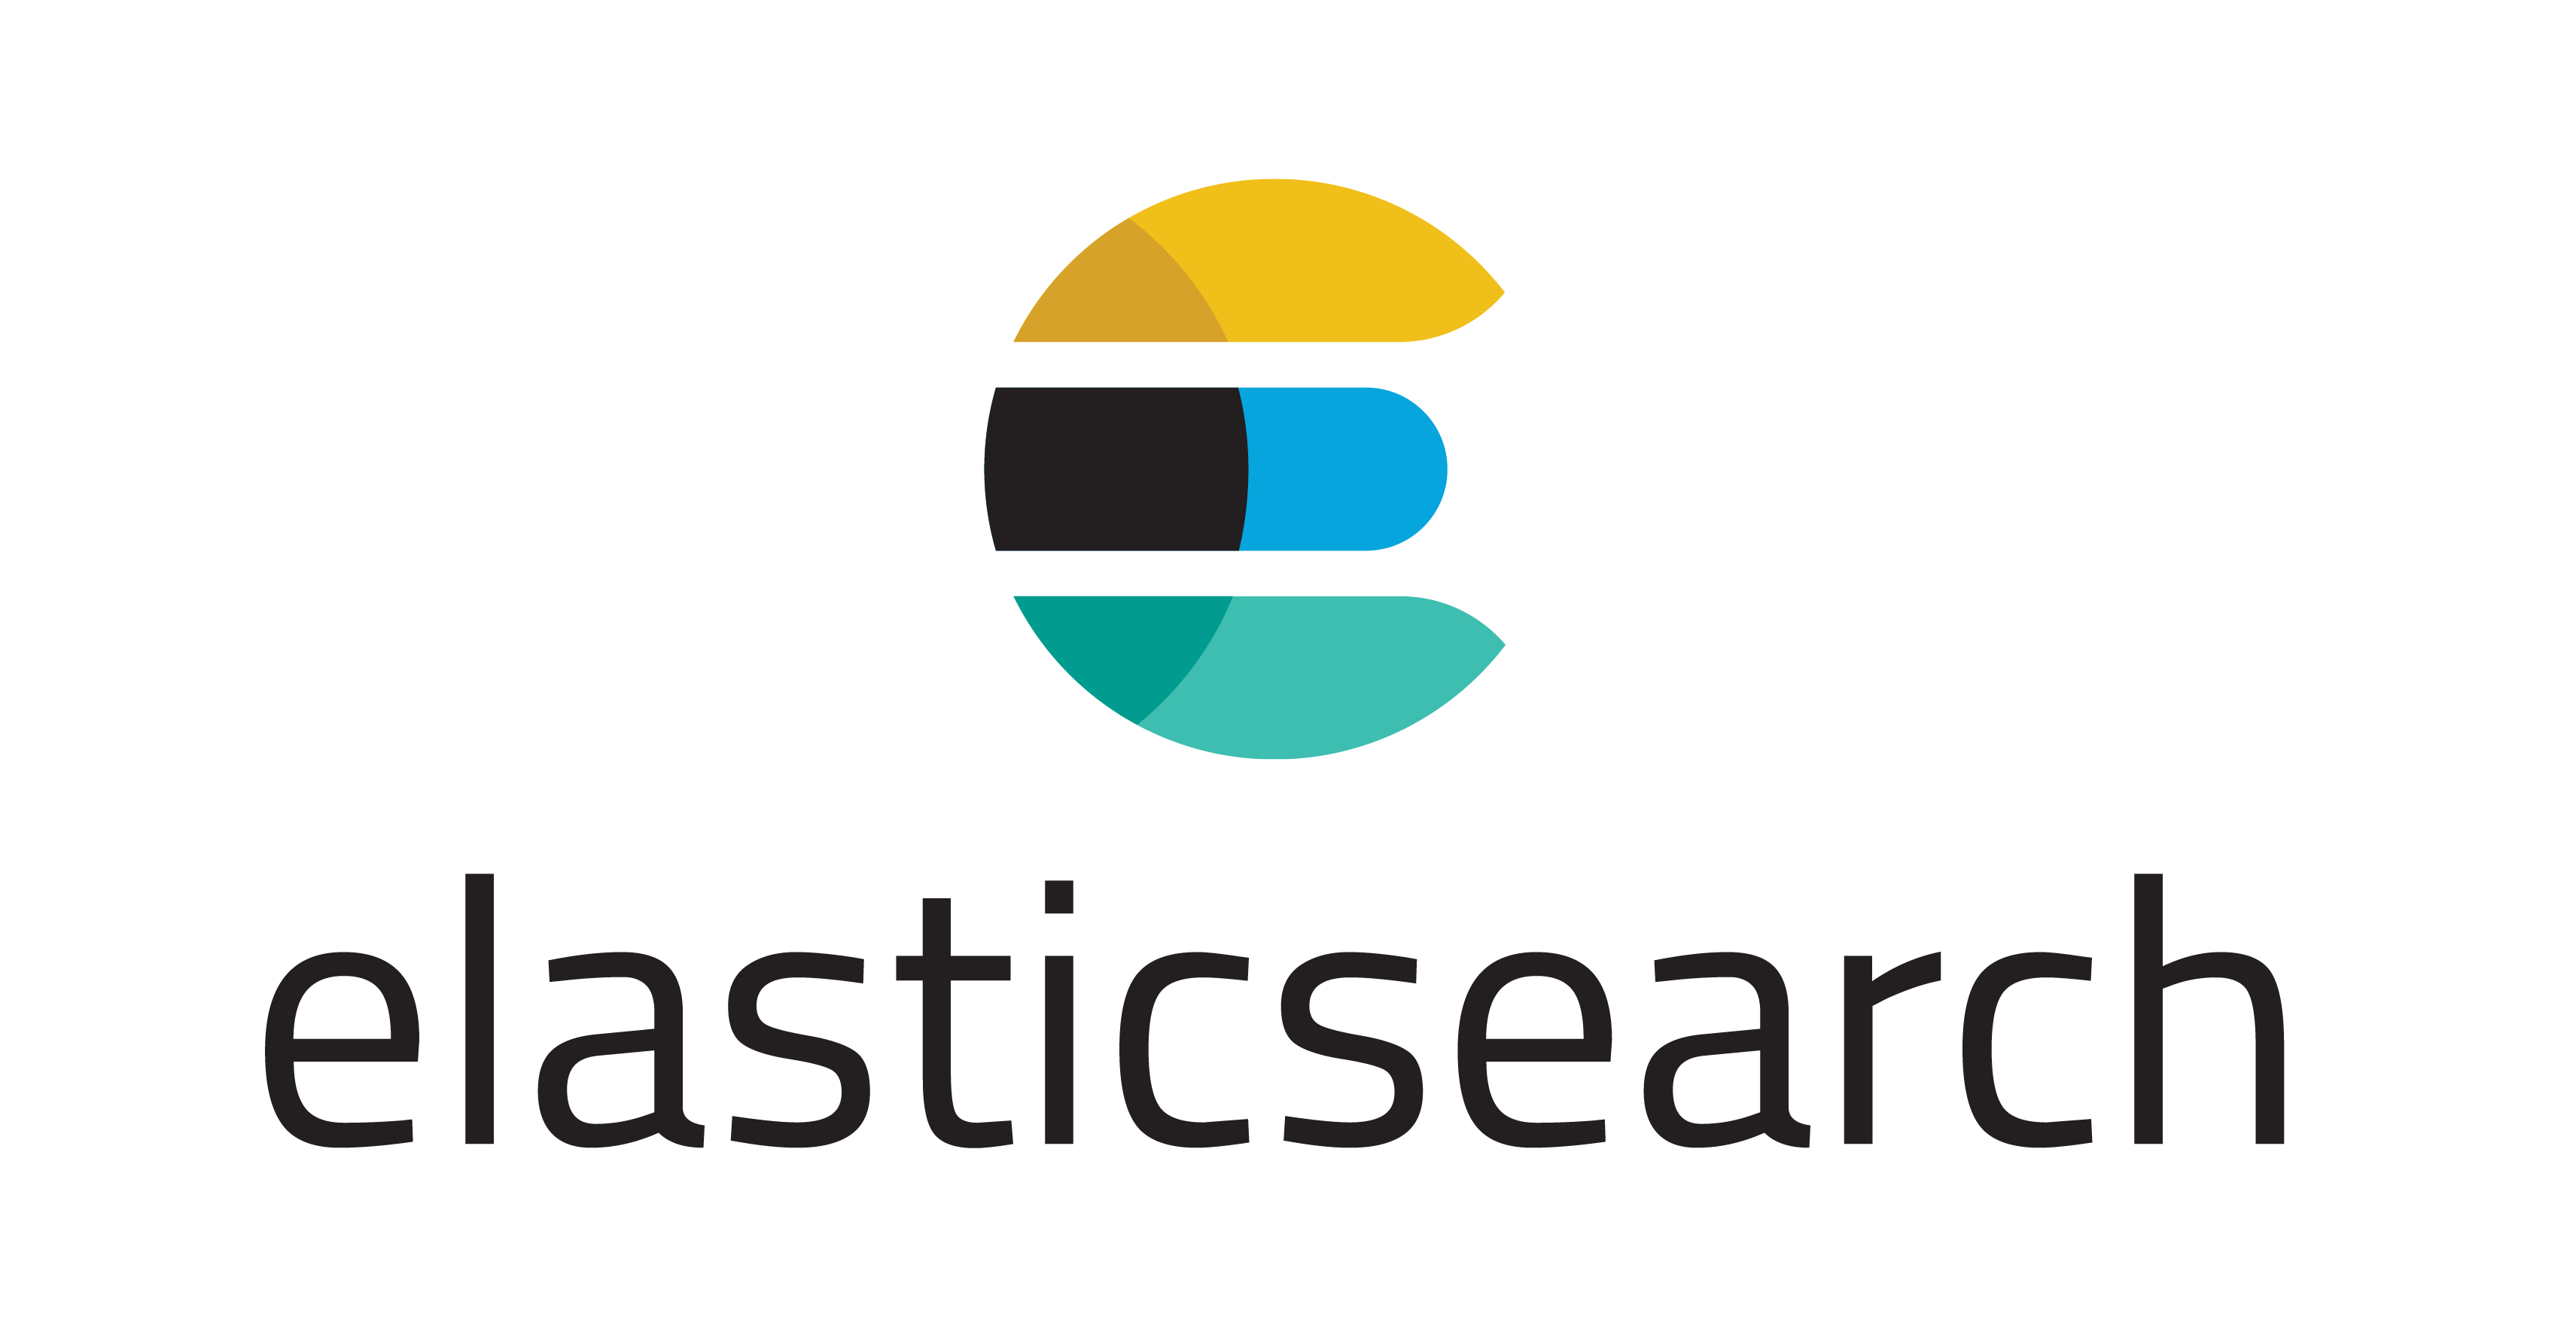 elasticsearch_logo